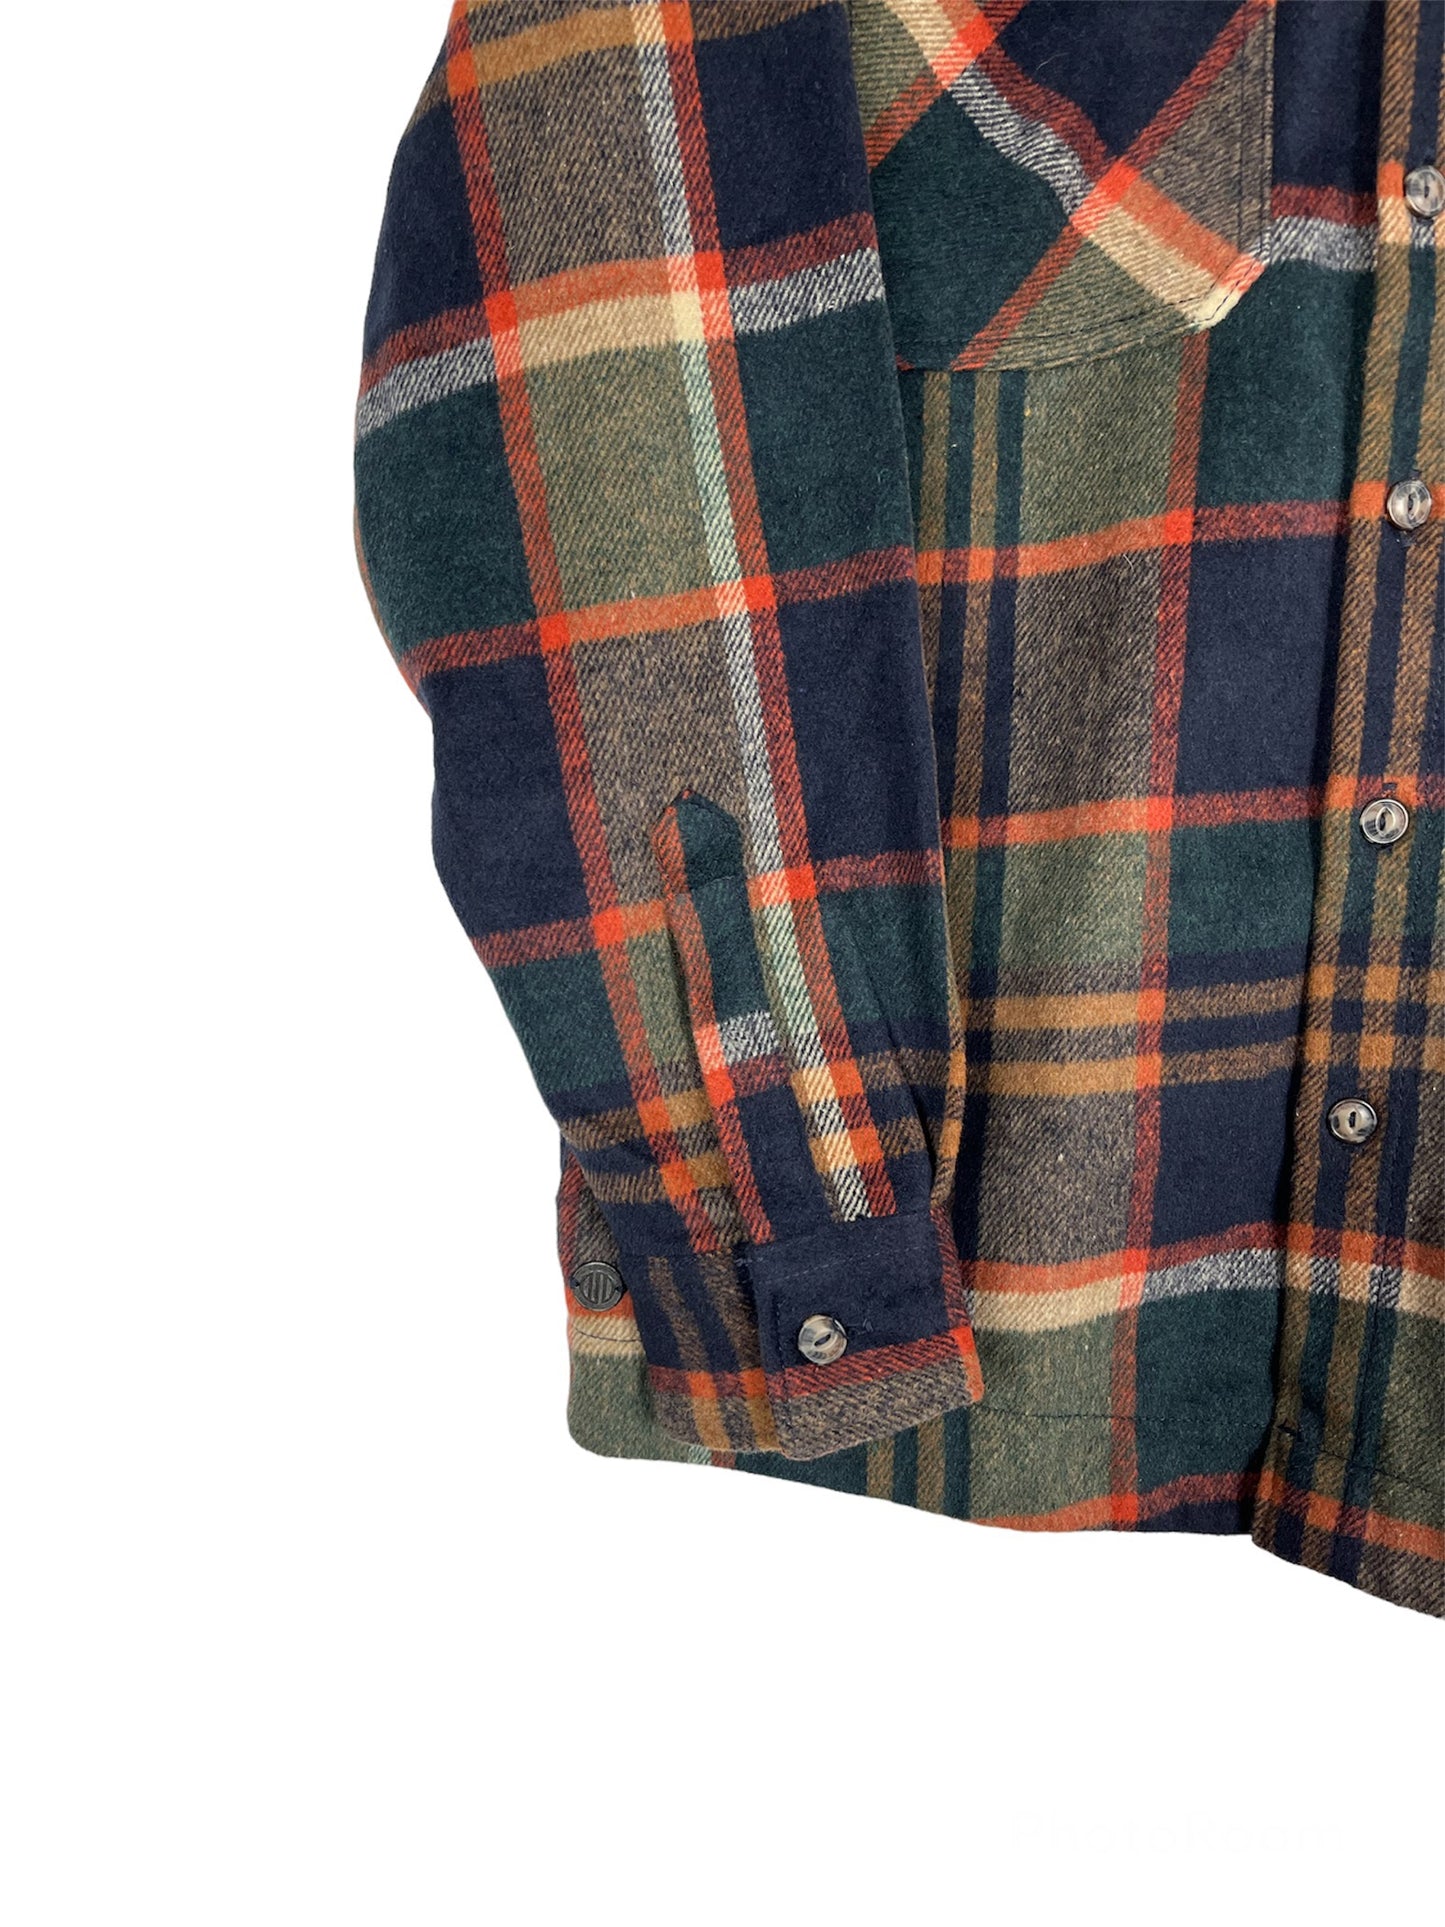 Nordam Flannel Shirt Jacket - Large